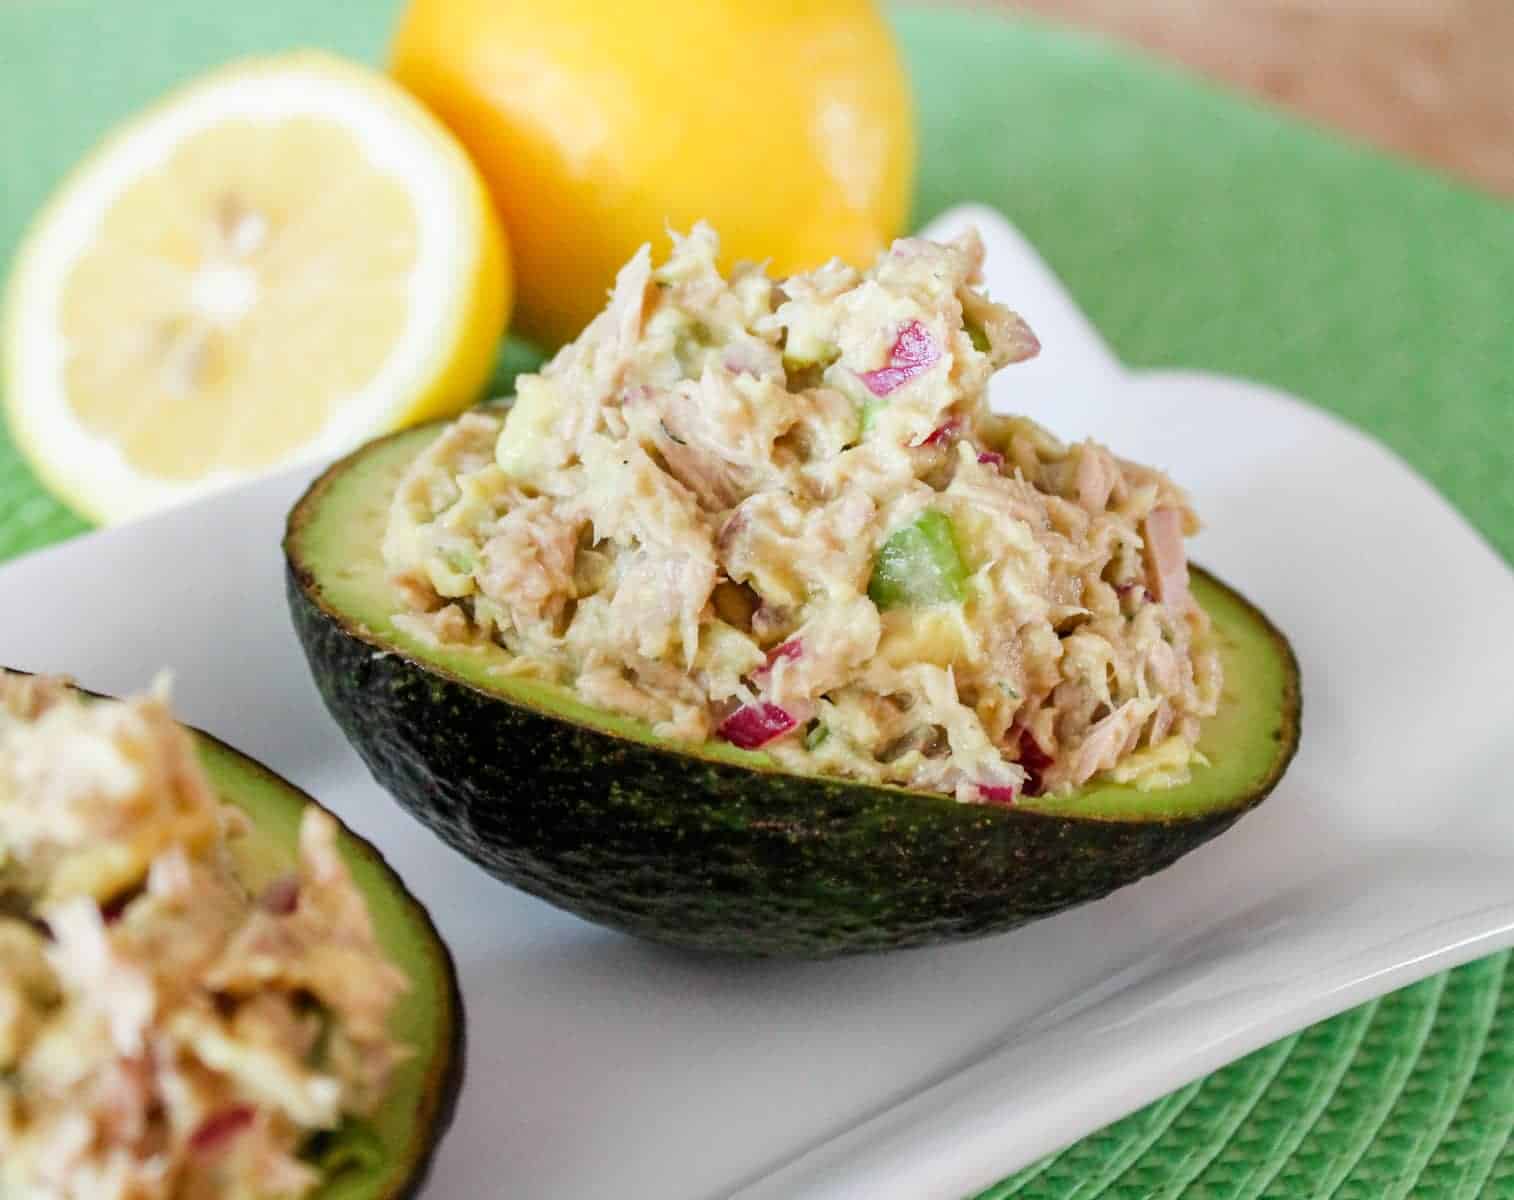 An avocado shell stuffed with avocado tuna salad.